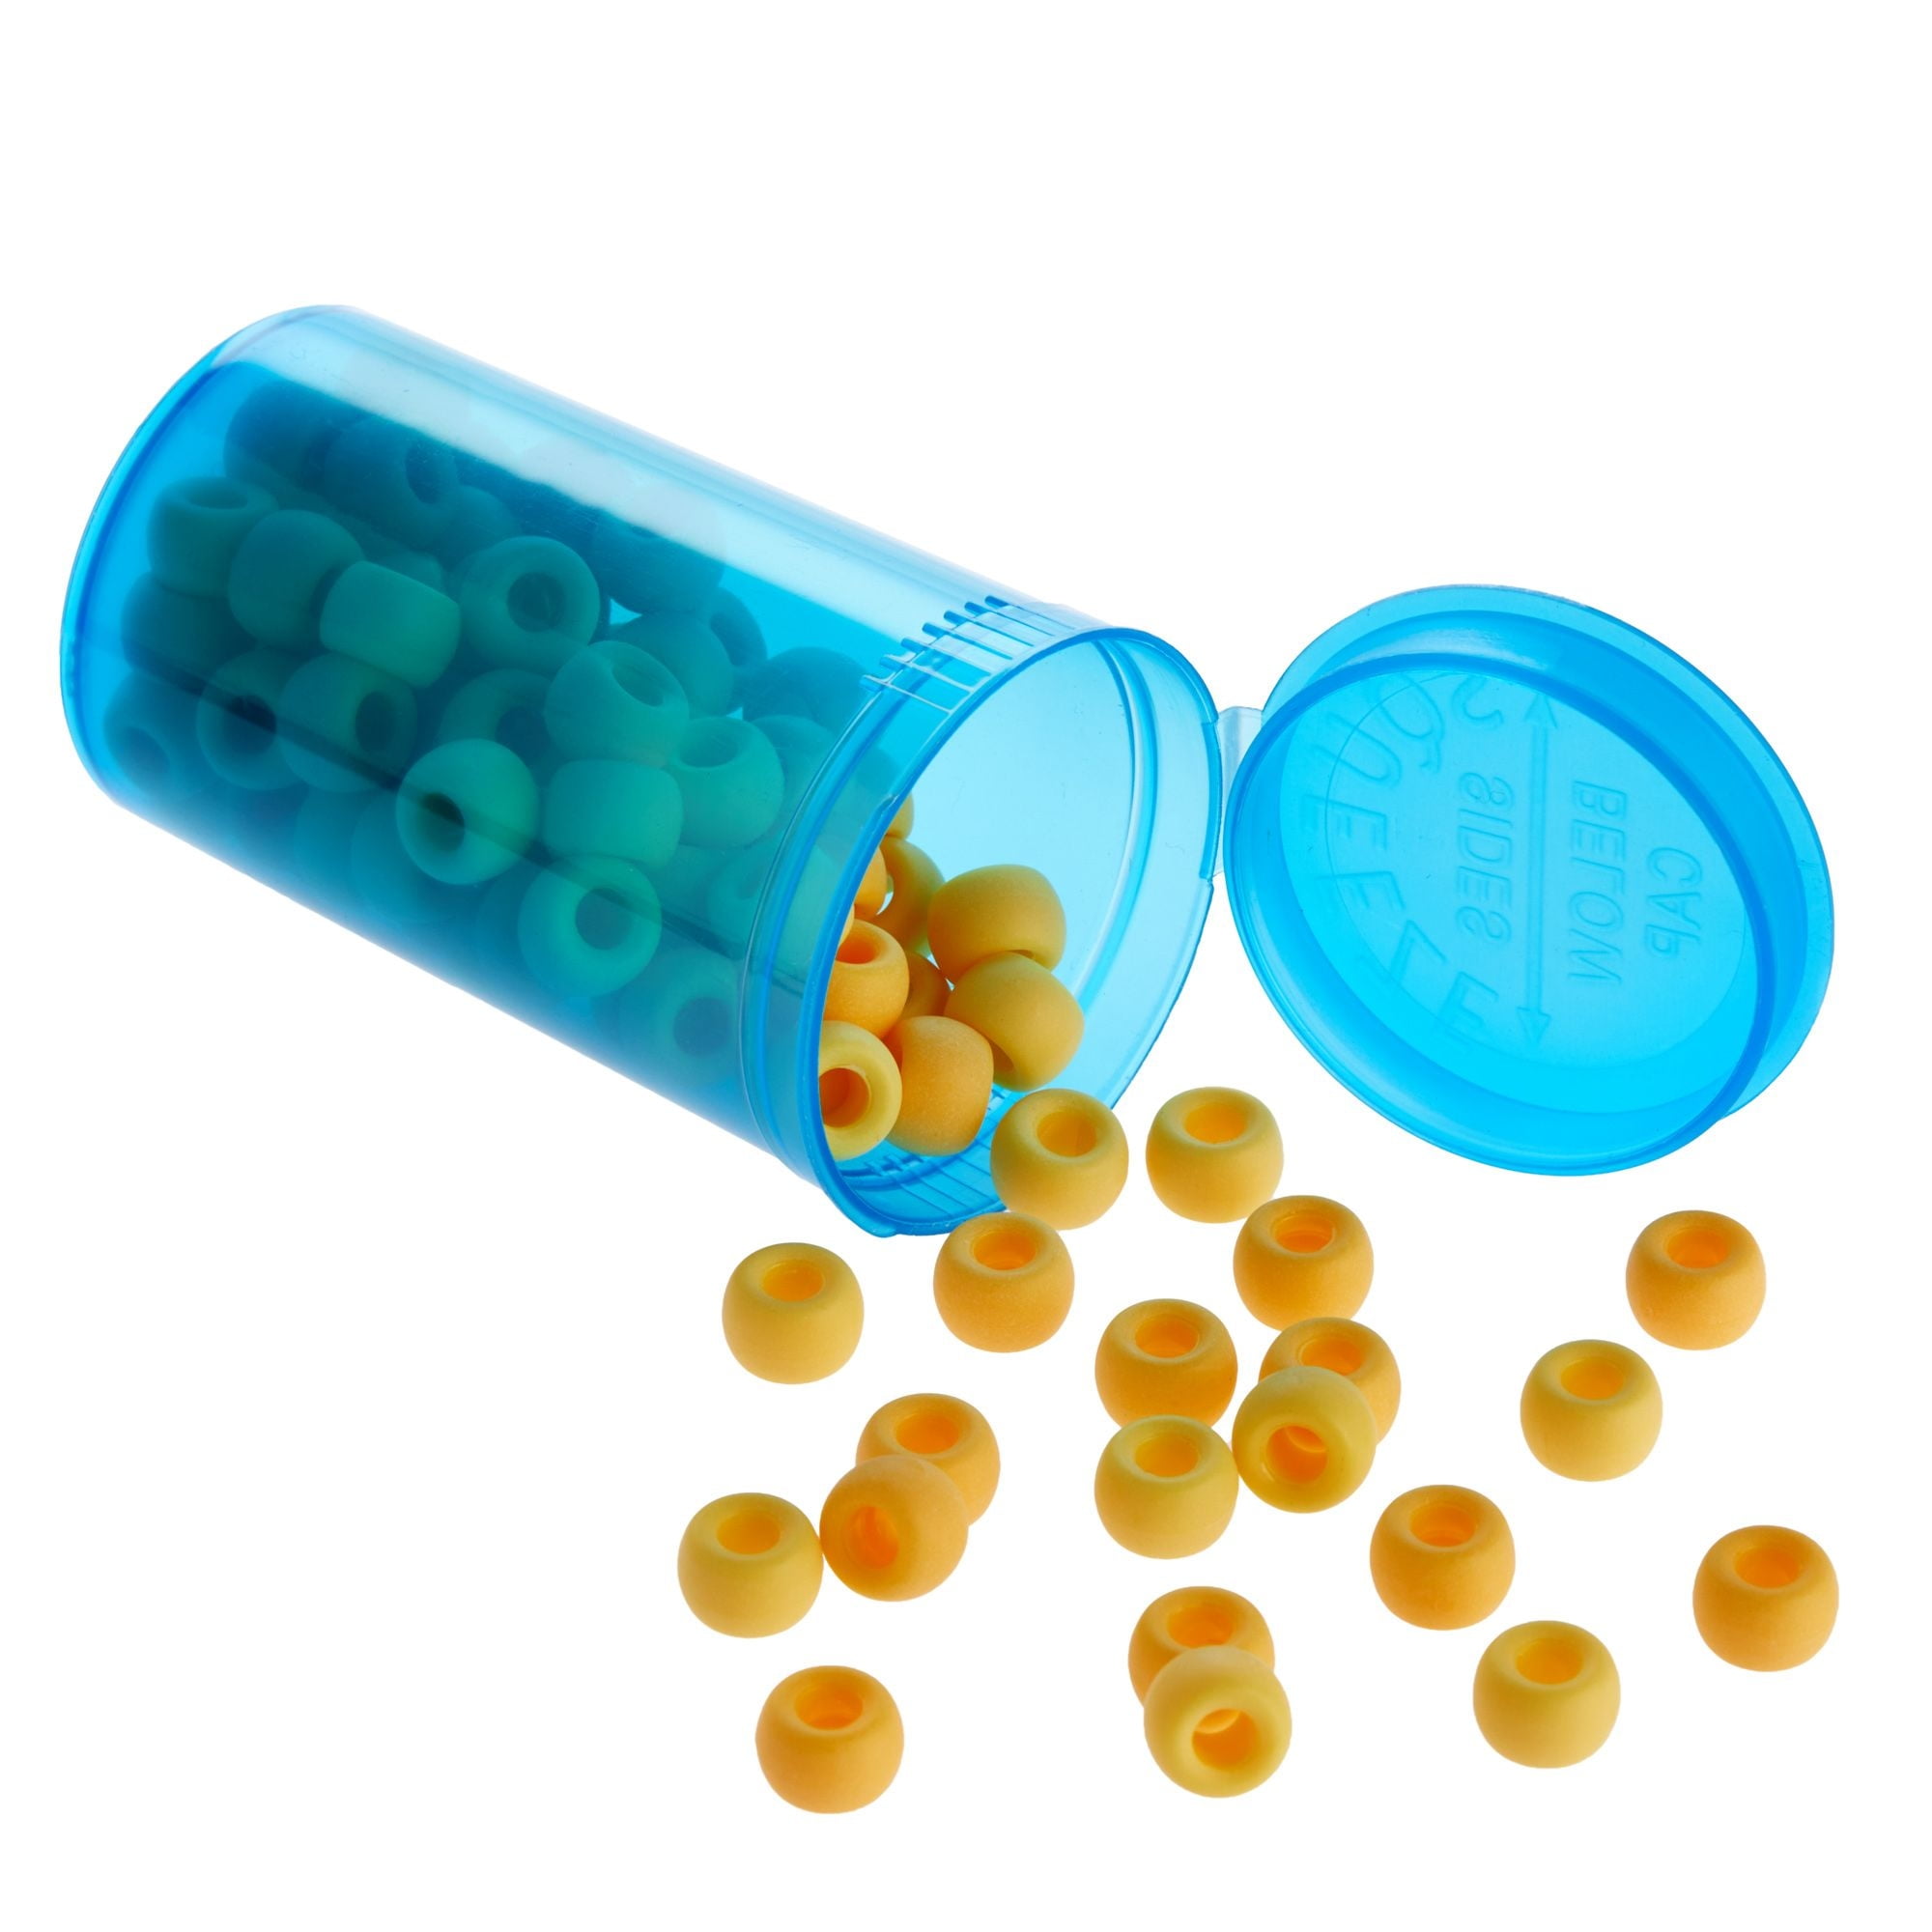 20 Pack Empty Pill Bottles with Pop Top Caps, 30 Dram Medicine